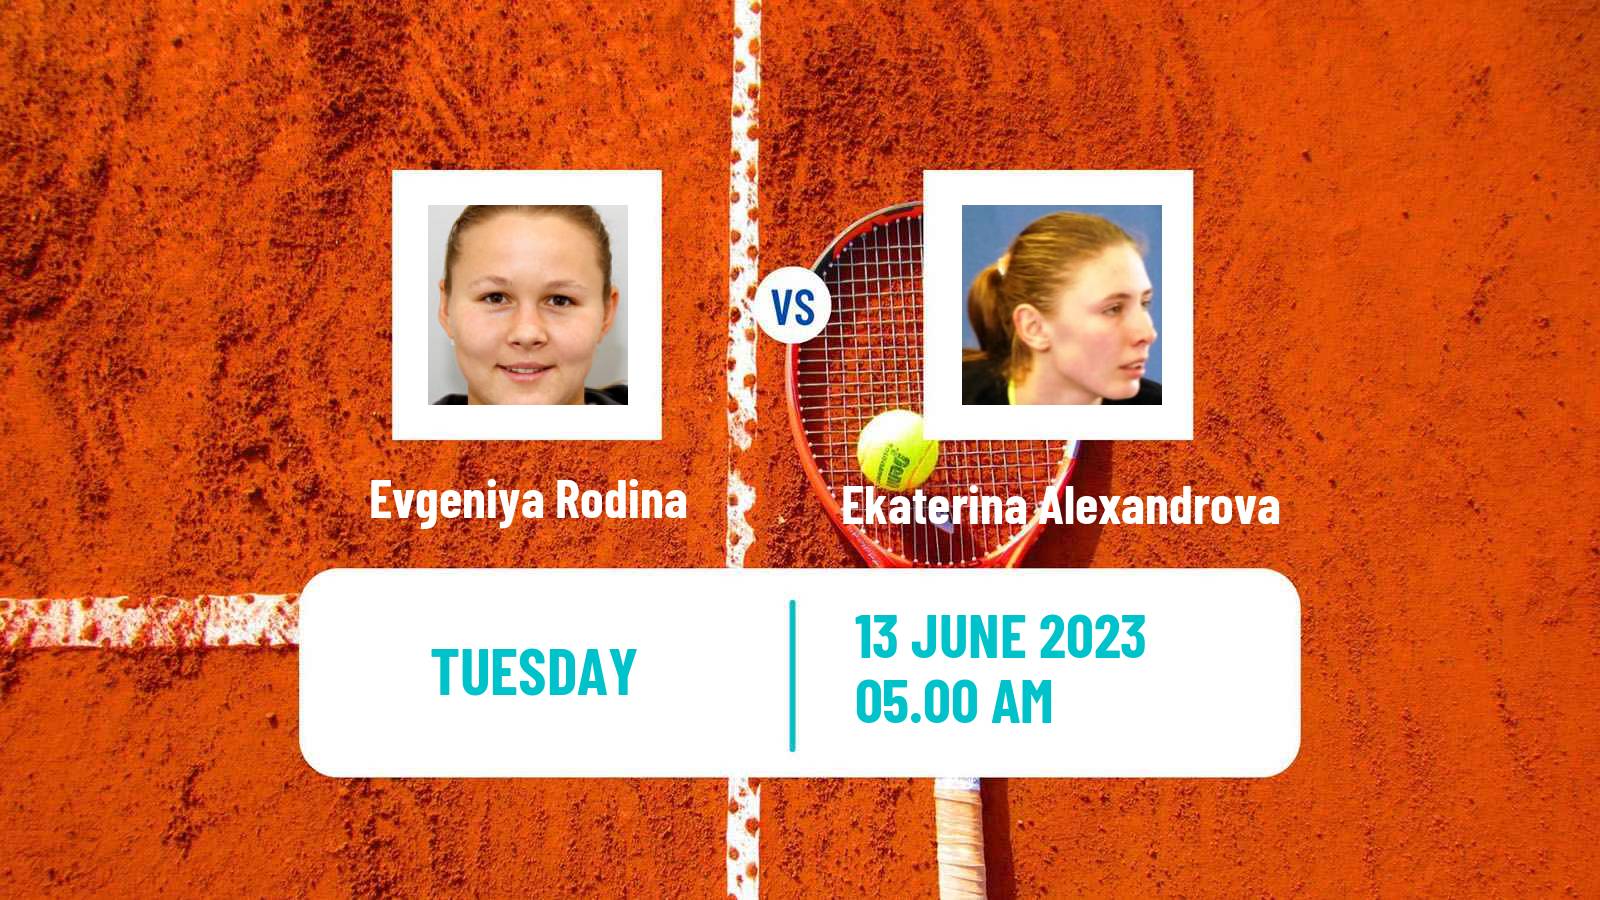 Tennis WTA Hertogenbosch Evgeniya Rodina - Ekaterina Alexandrova